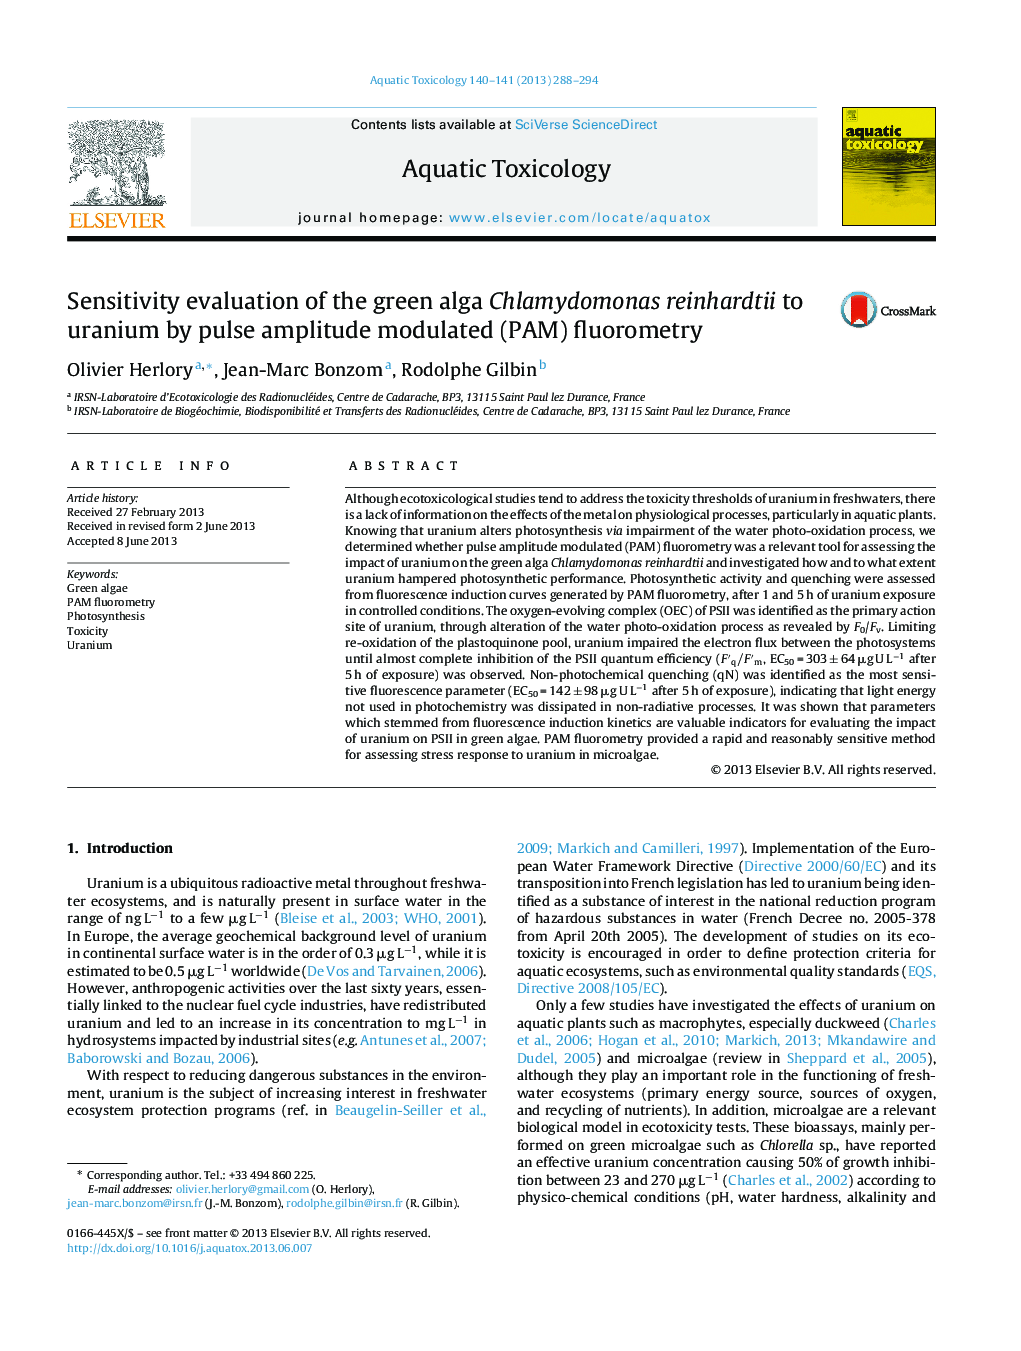 Sensitivity evaluation of the green alga Chlamydomonas reinhardtii to uranium by pulse amplitude modulated (PAM) fluorometry